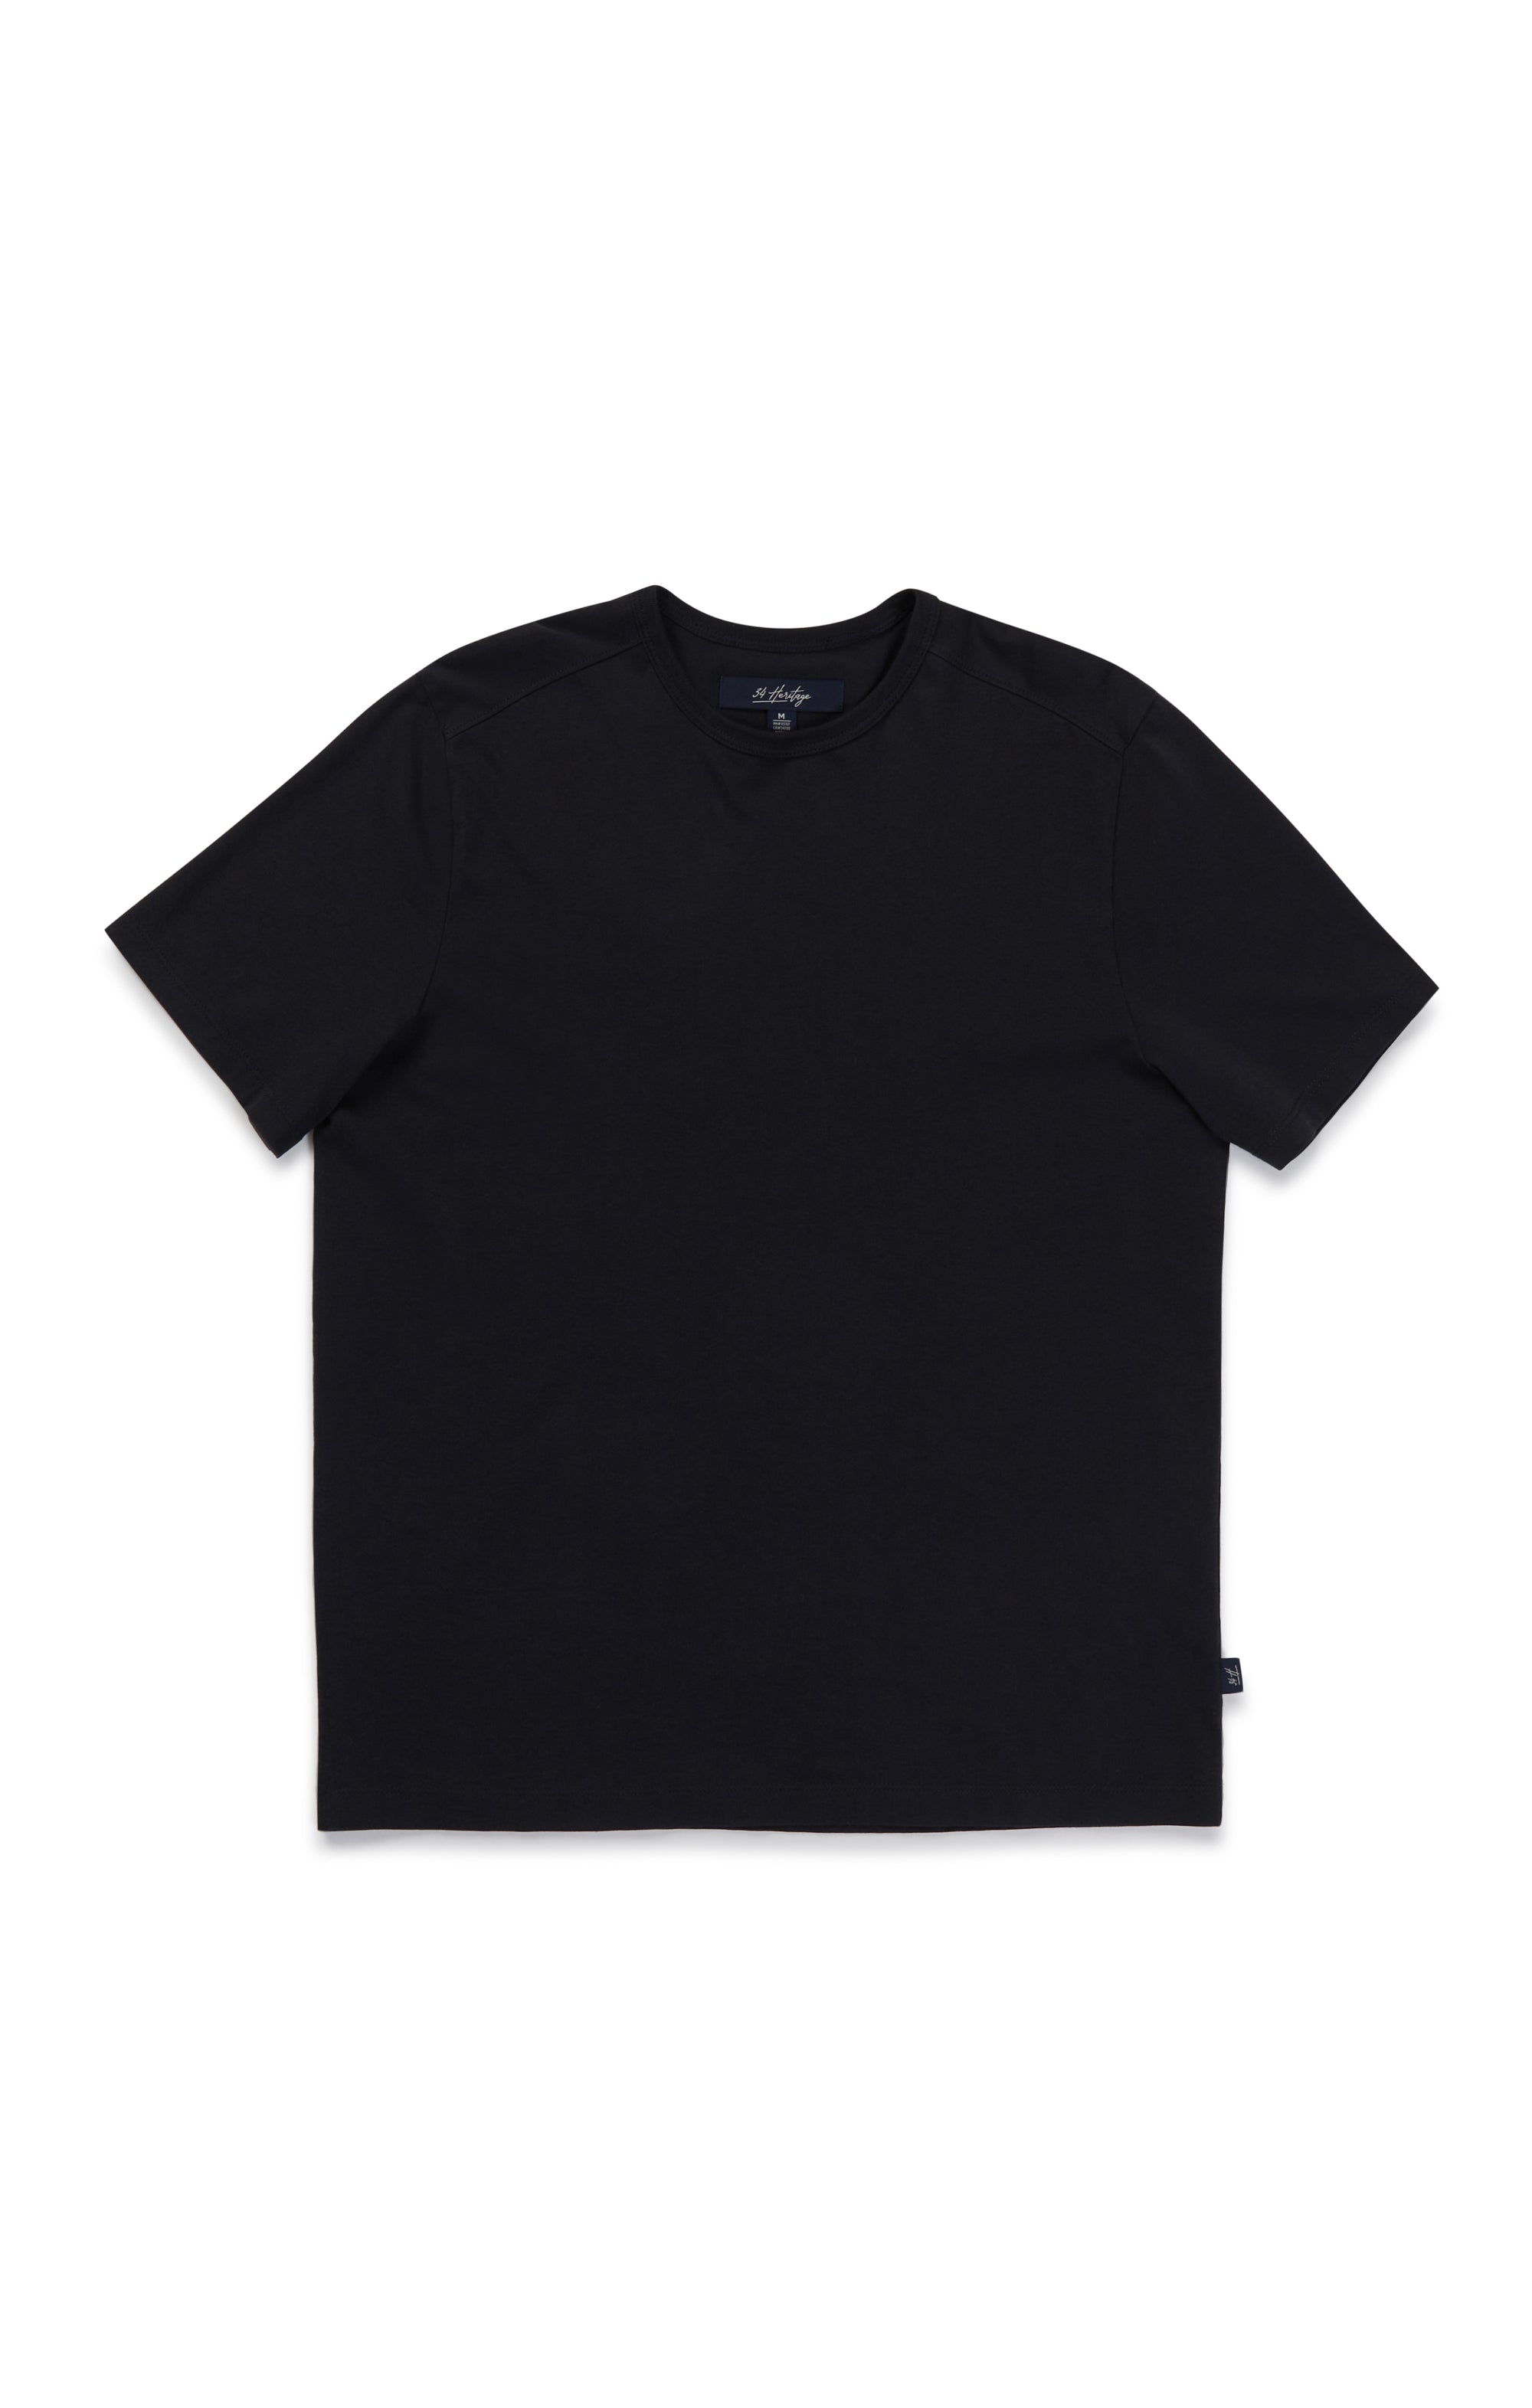 Basic Crew Neck T-Shirt in Black Image 7